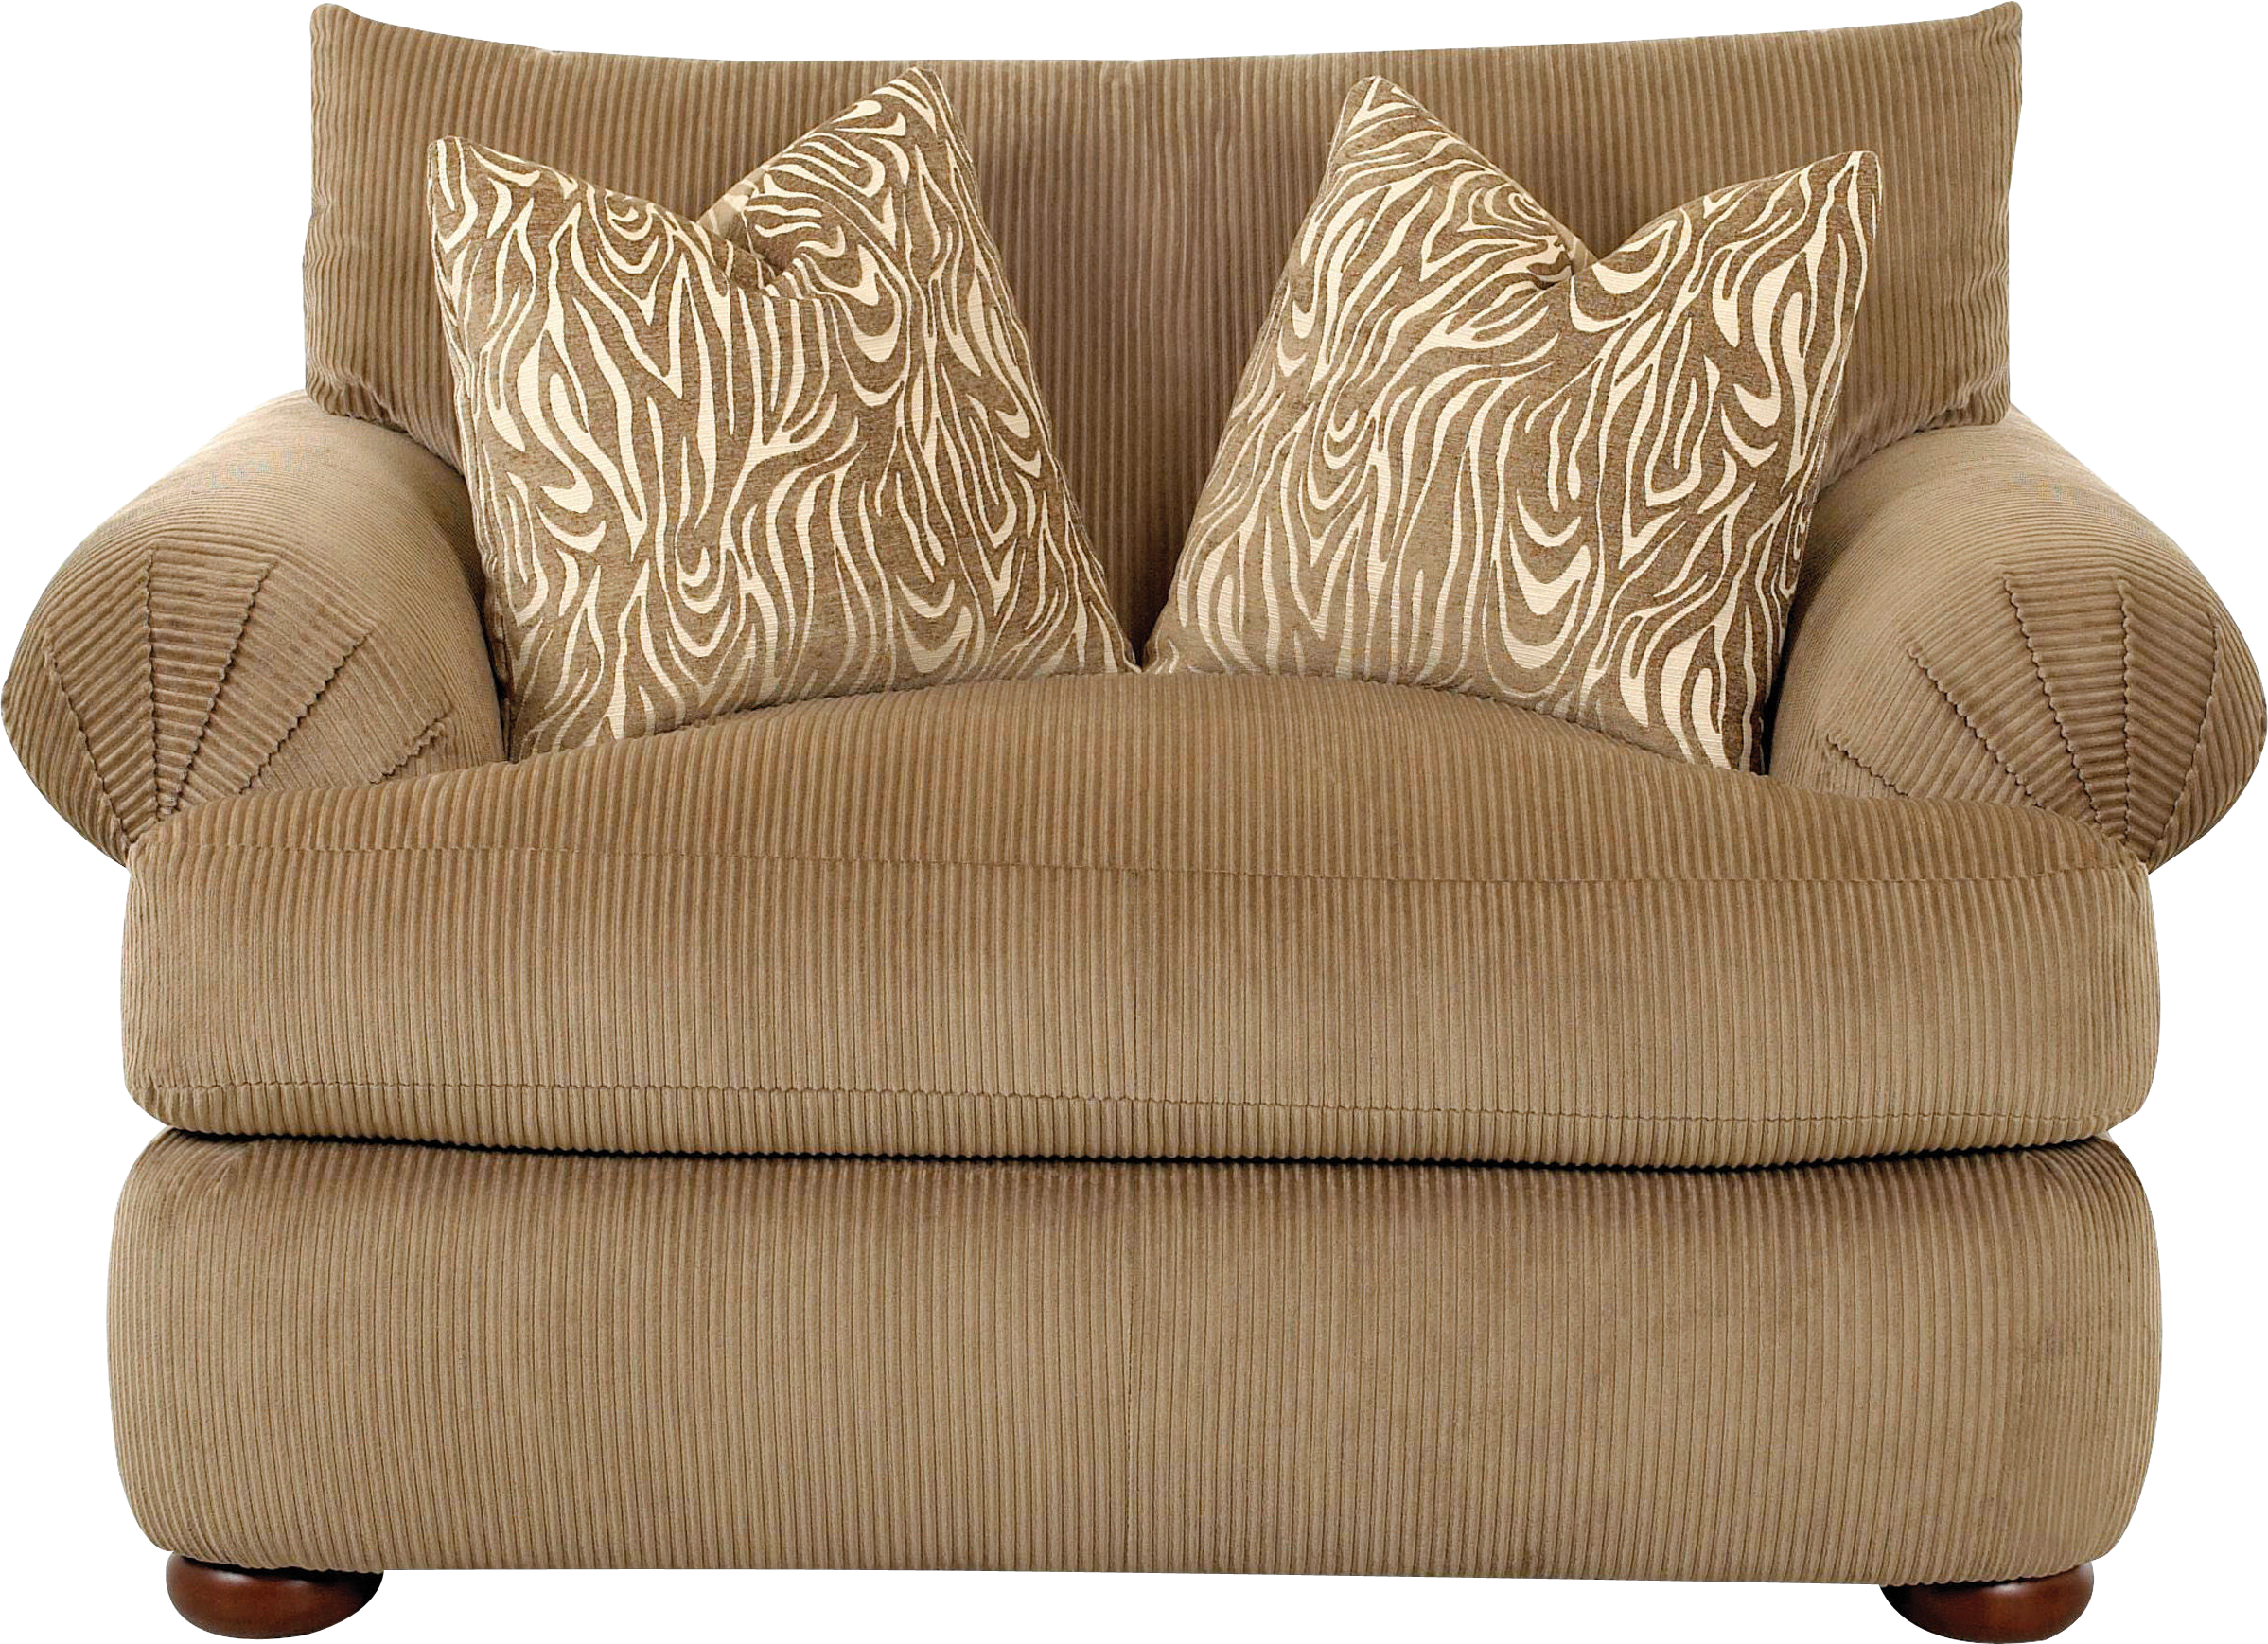 Sofa Png Image - Furniture, Transparent background PNG HD thumbnail